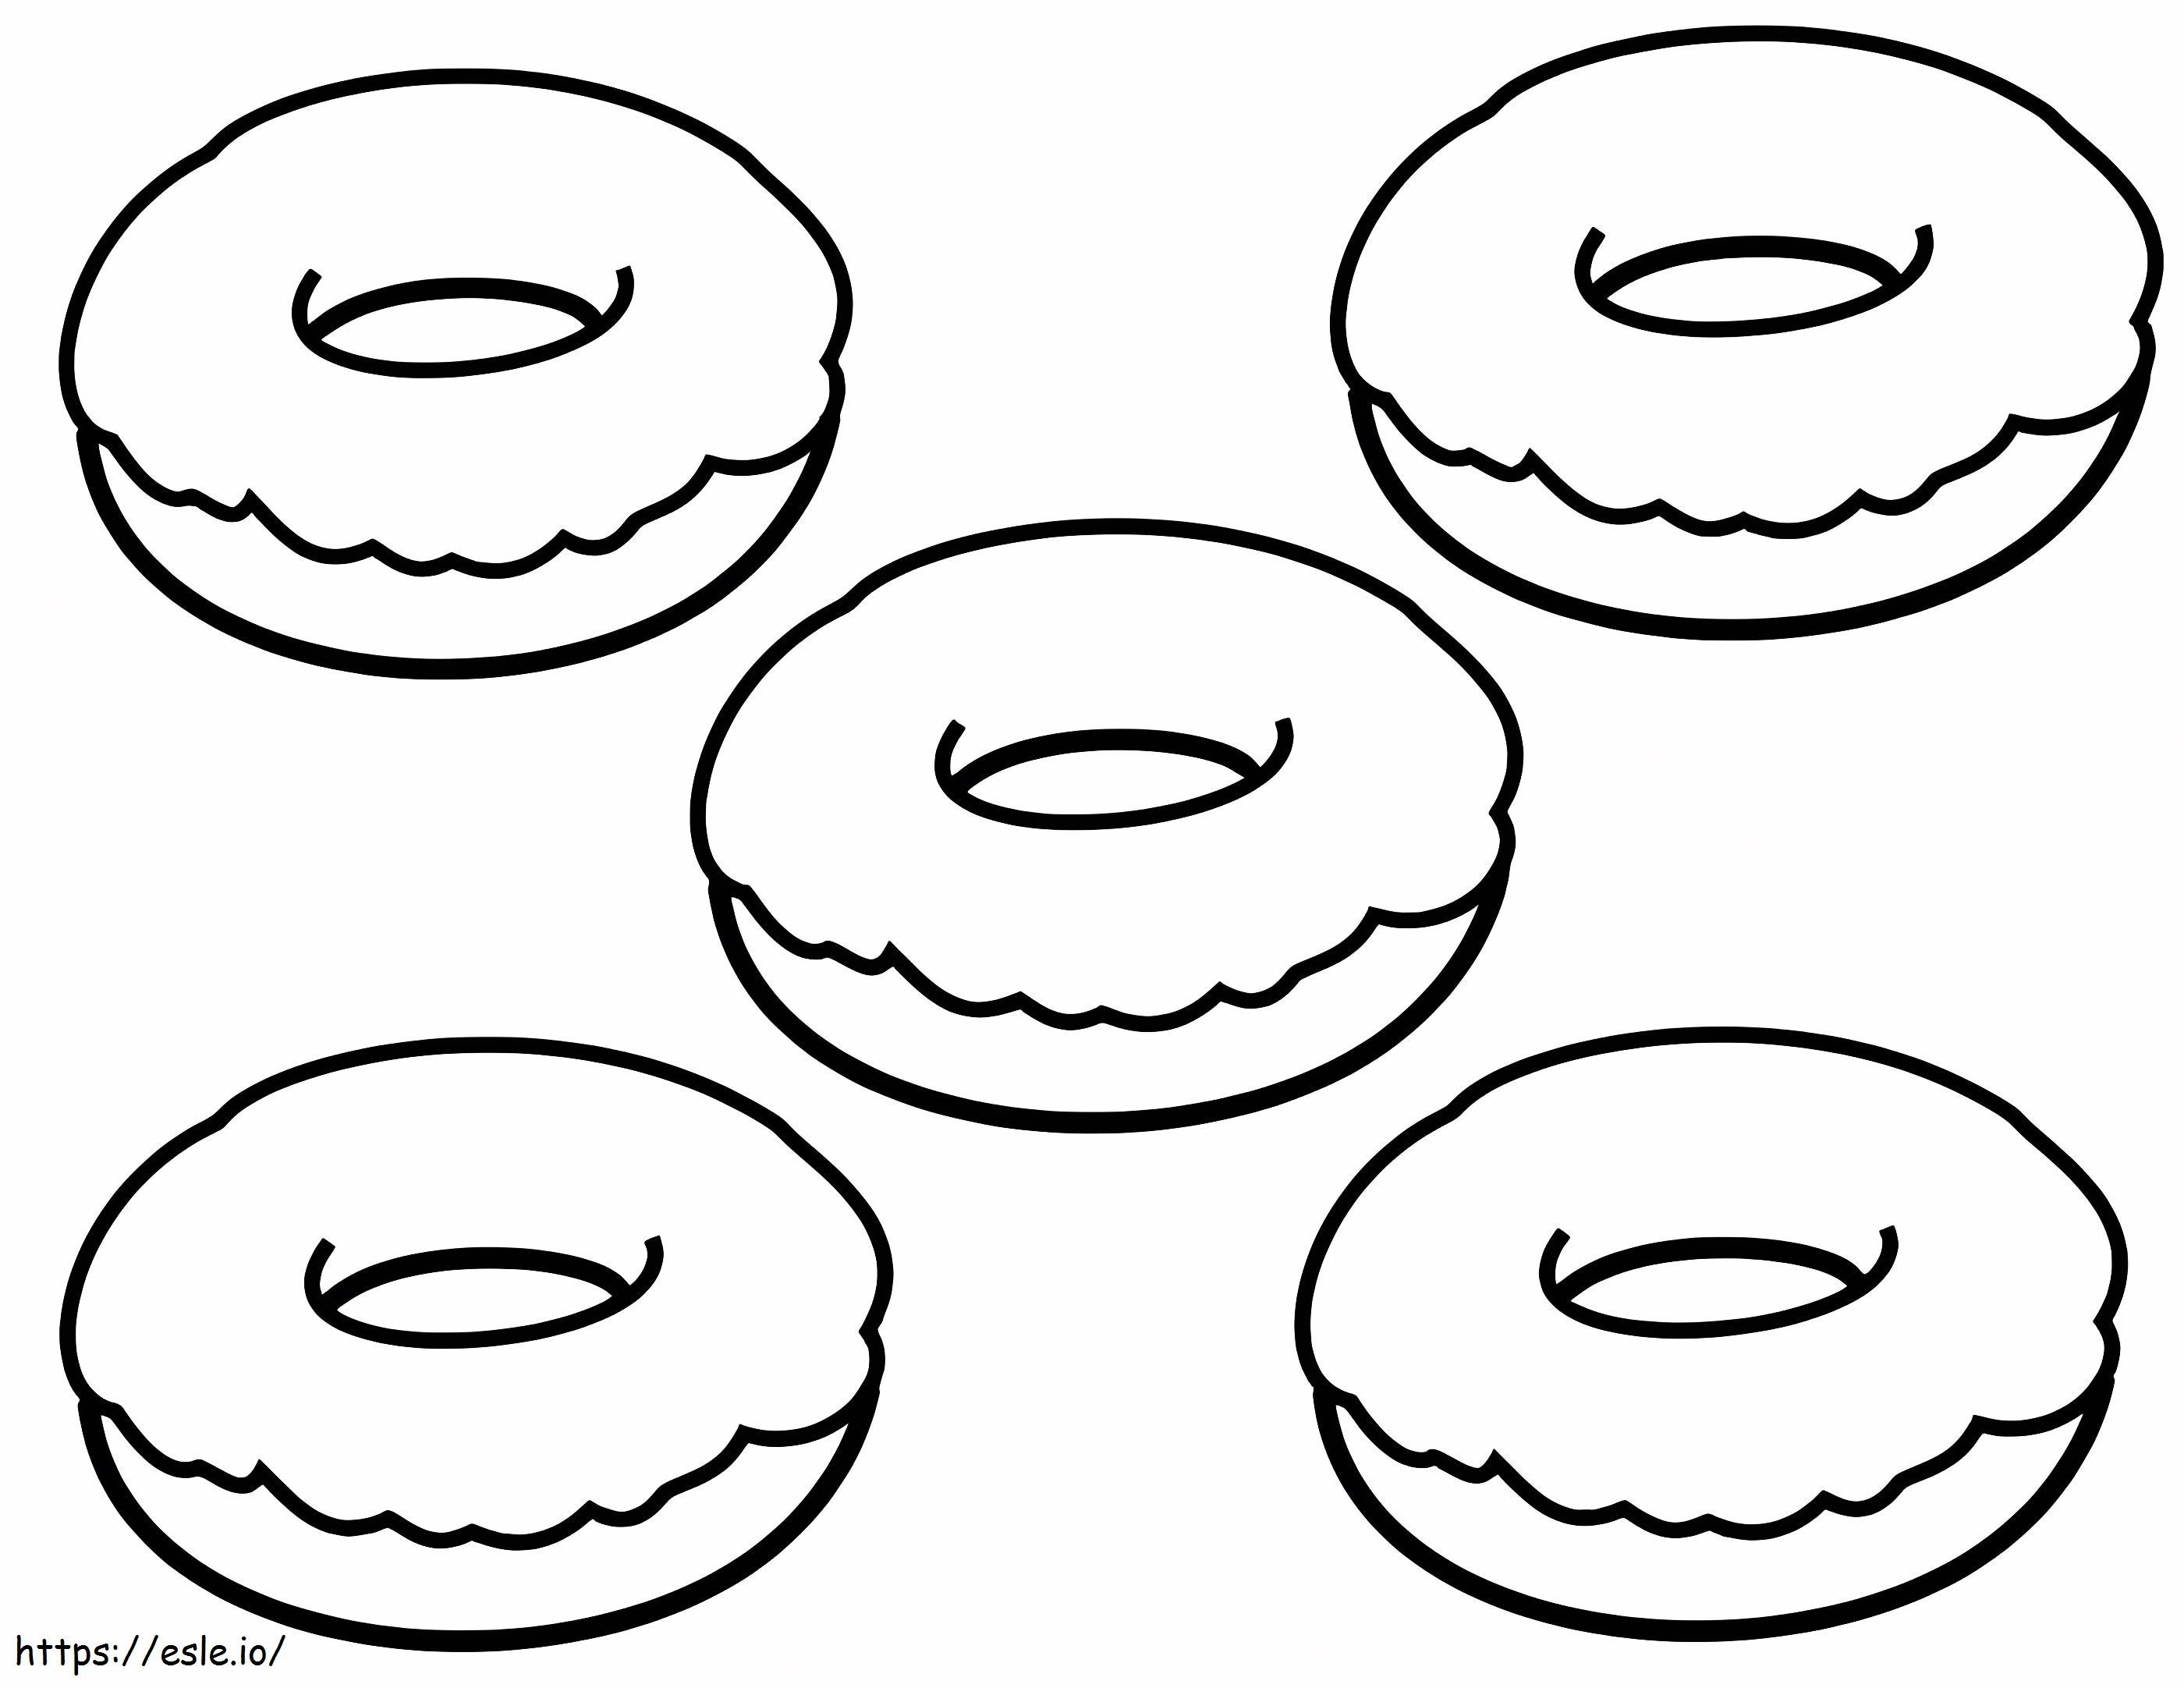 Fünf Donuts ausmalbilder